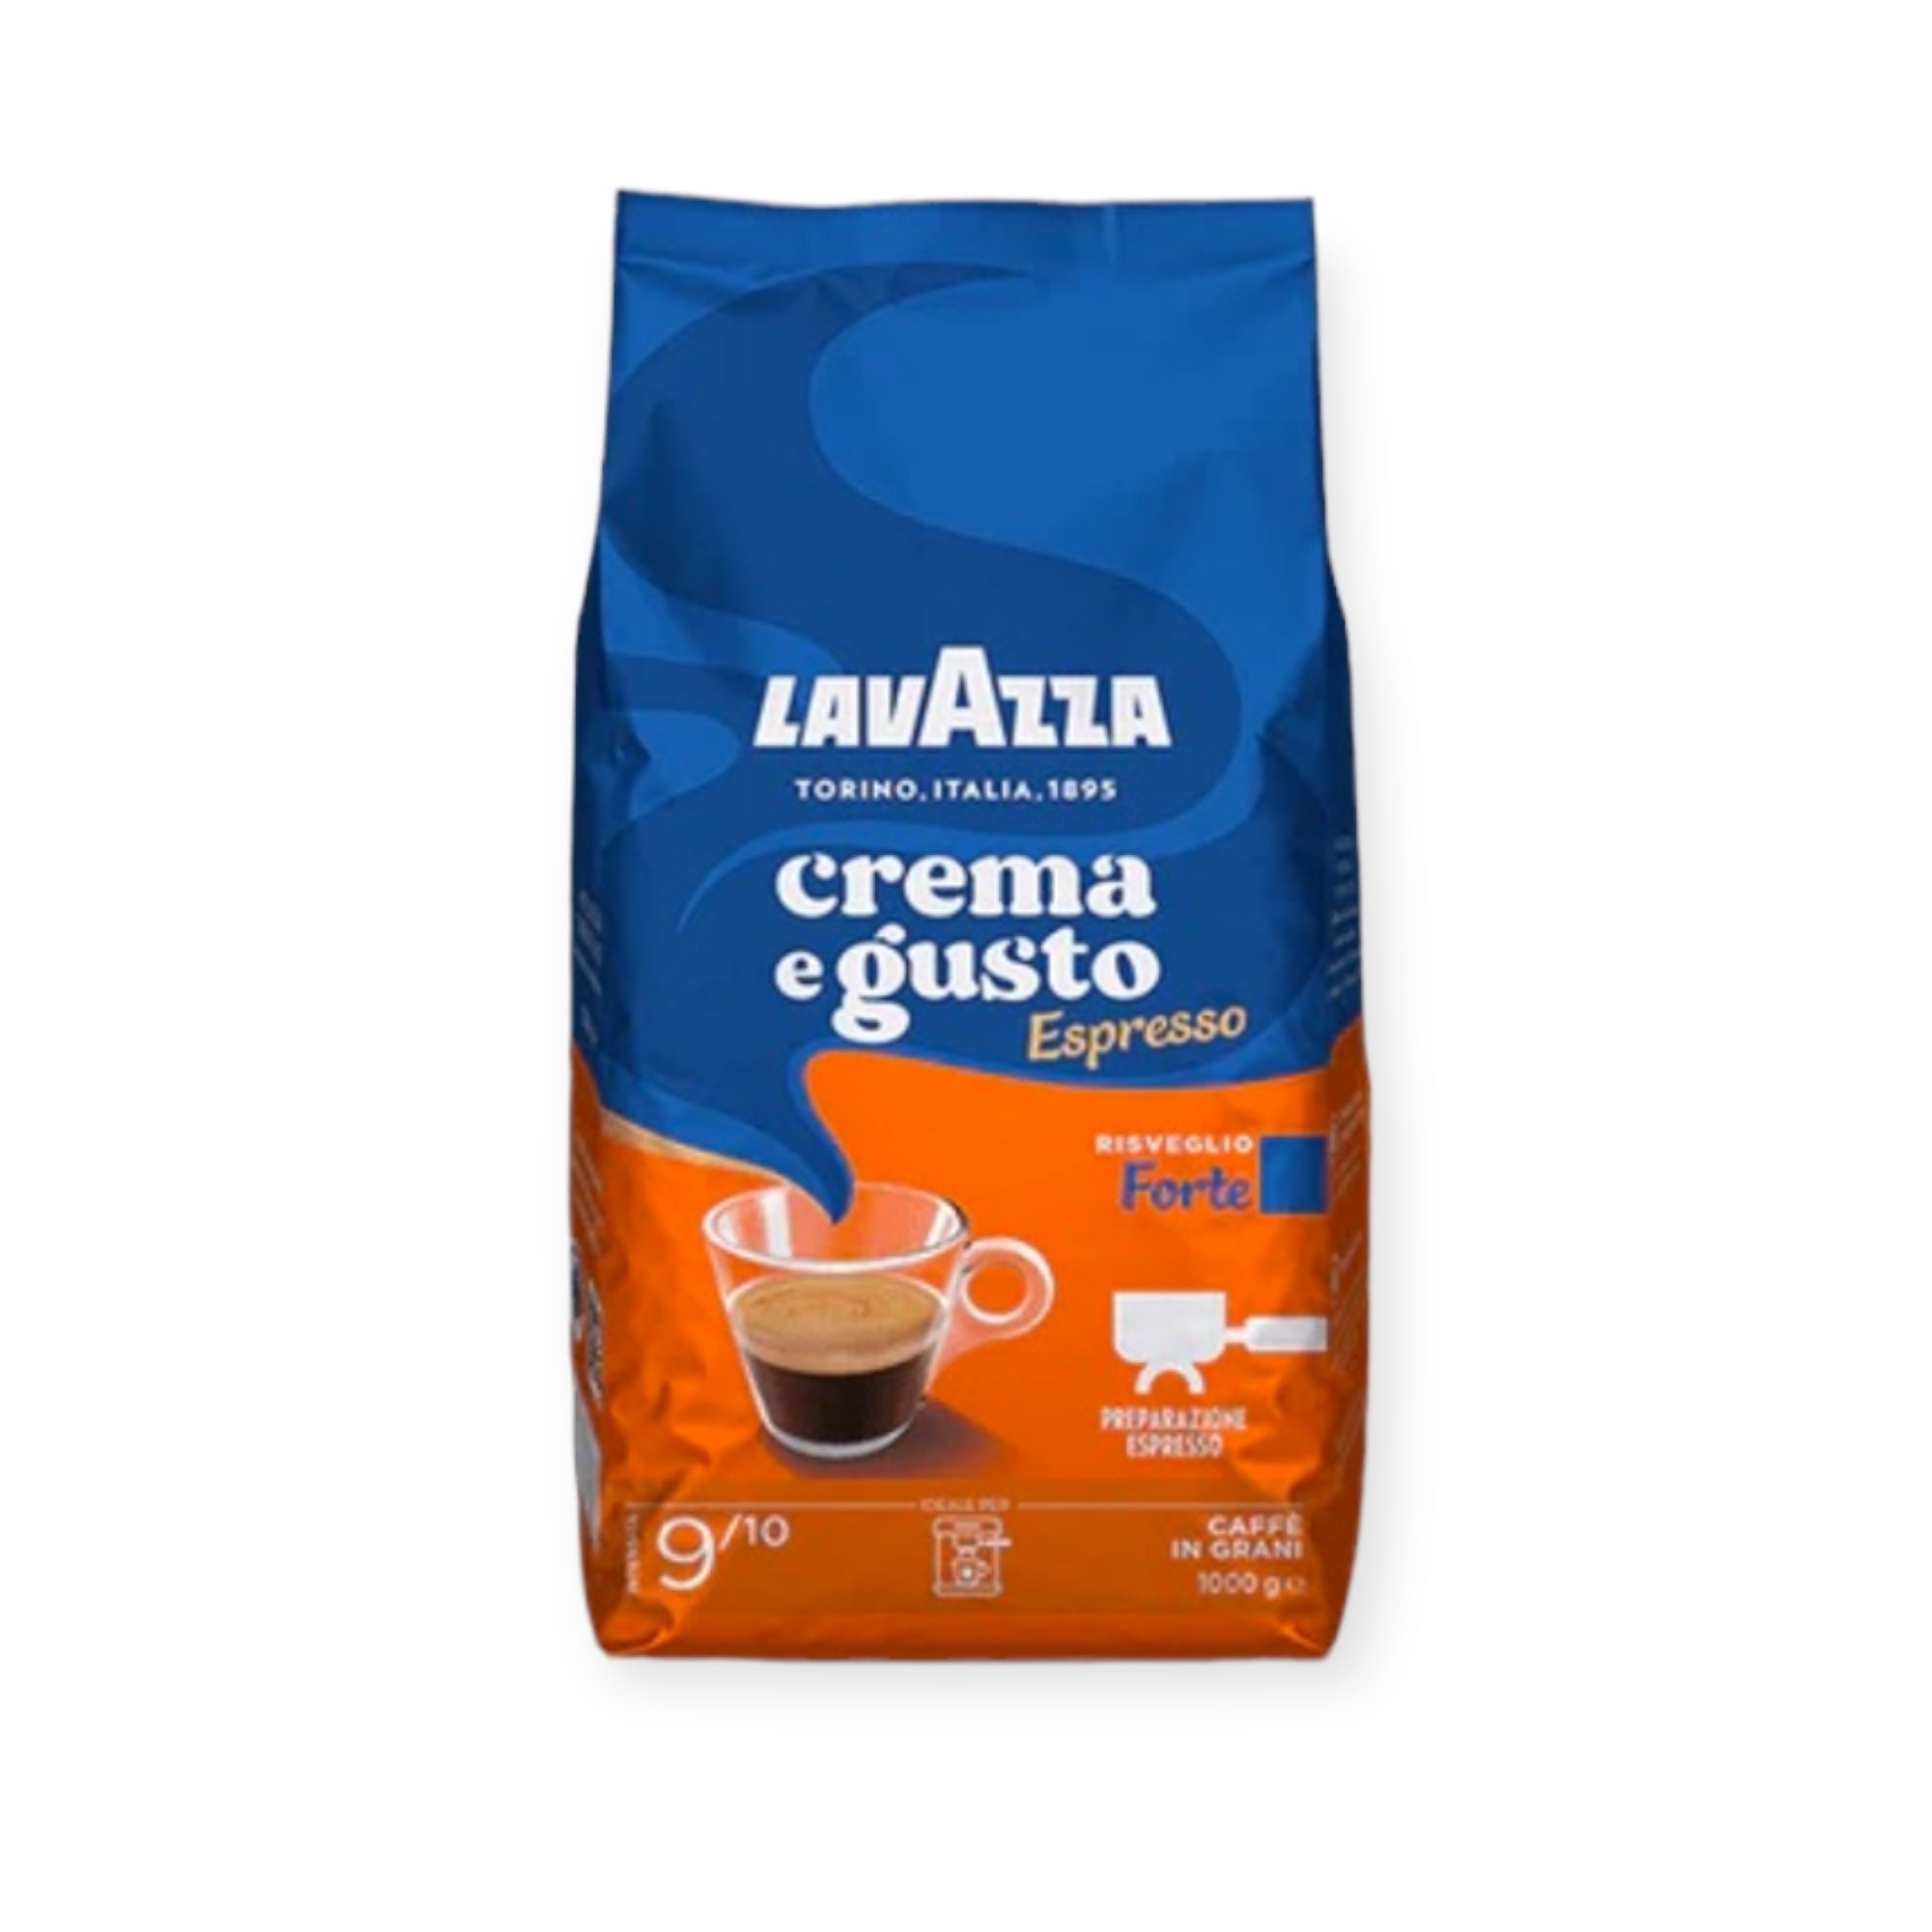 Lavazza Crema e gusto Forte whole beans 1Kg – Made In Eatalia